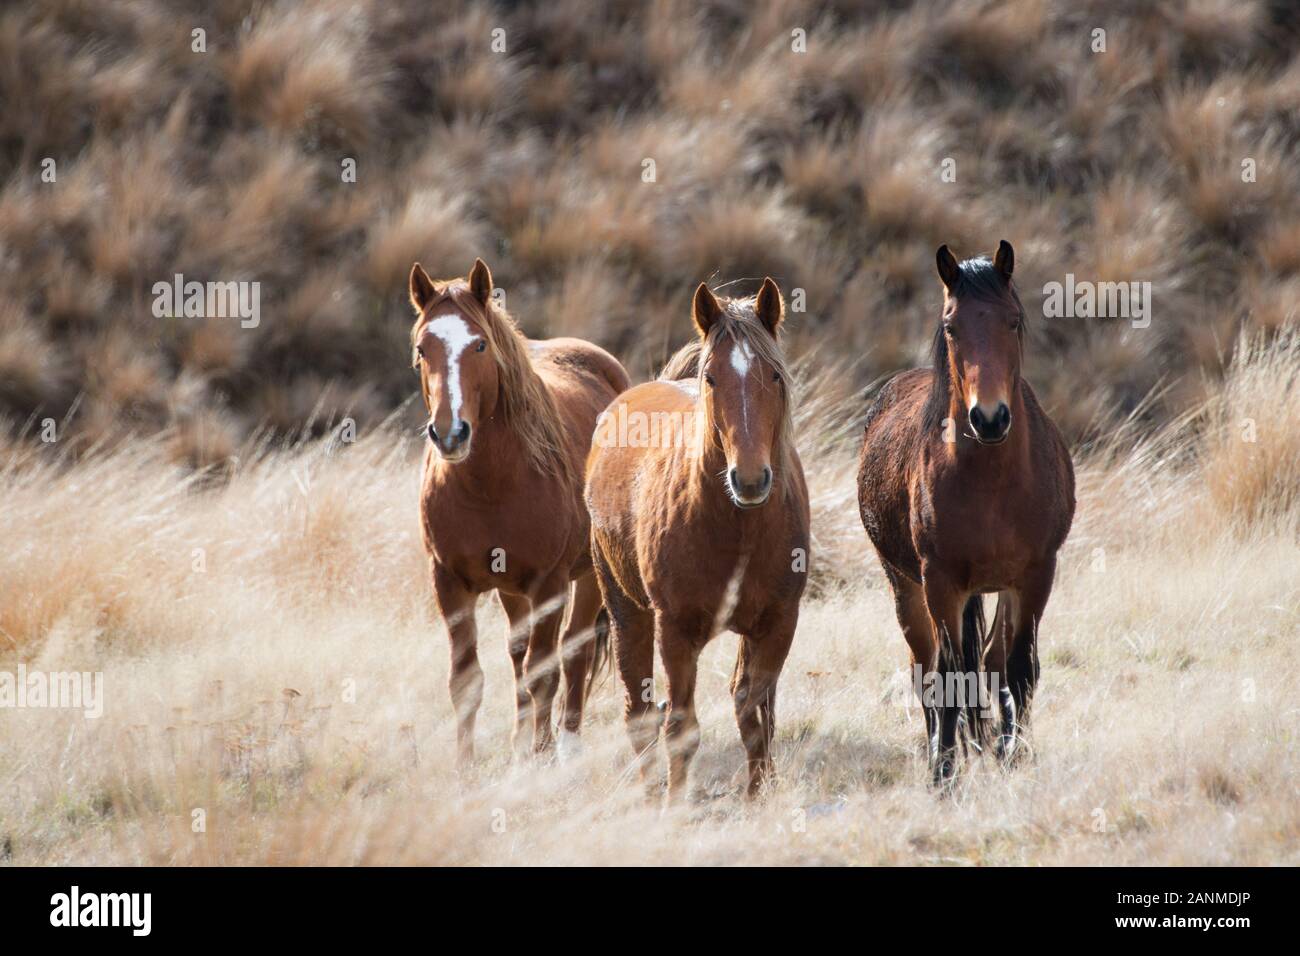 Three wild Kaimanawa horses standing among the tussock grass, New Zealand Stock Photo